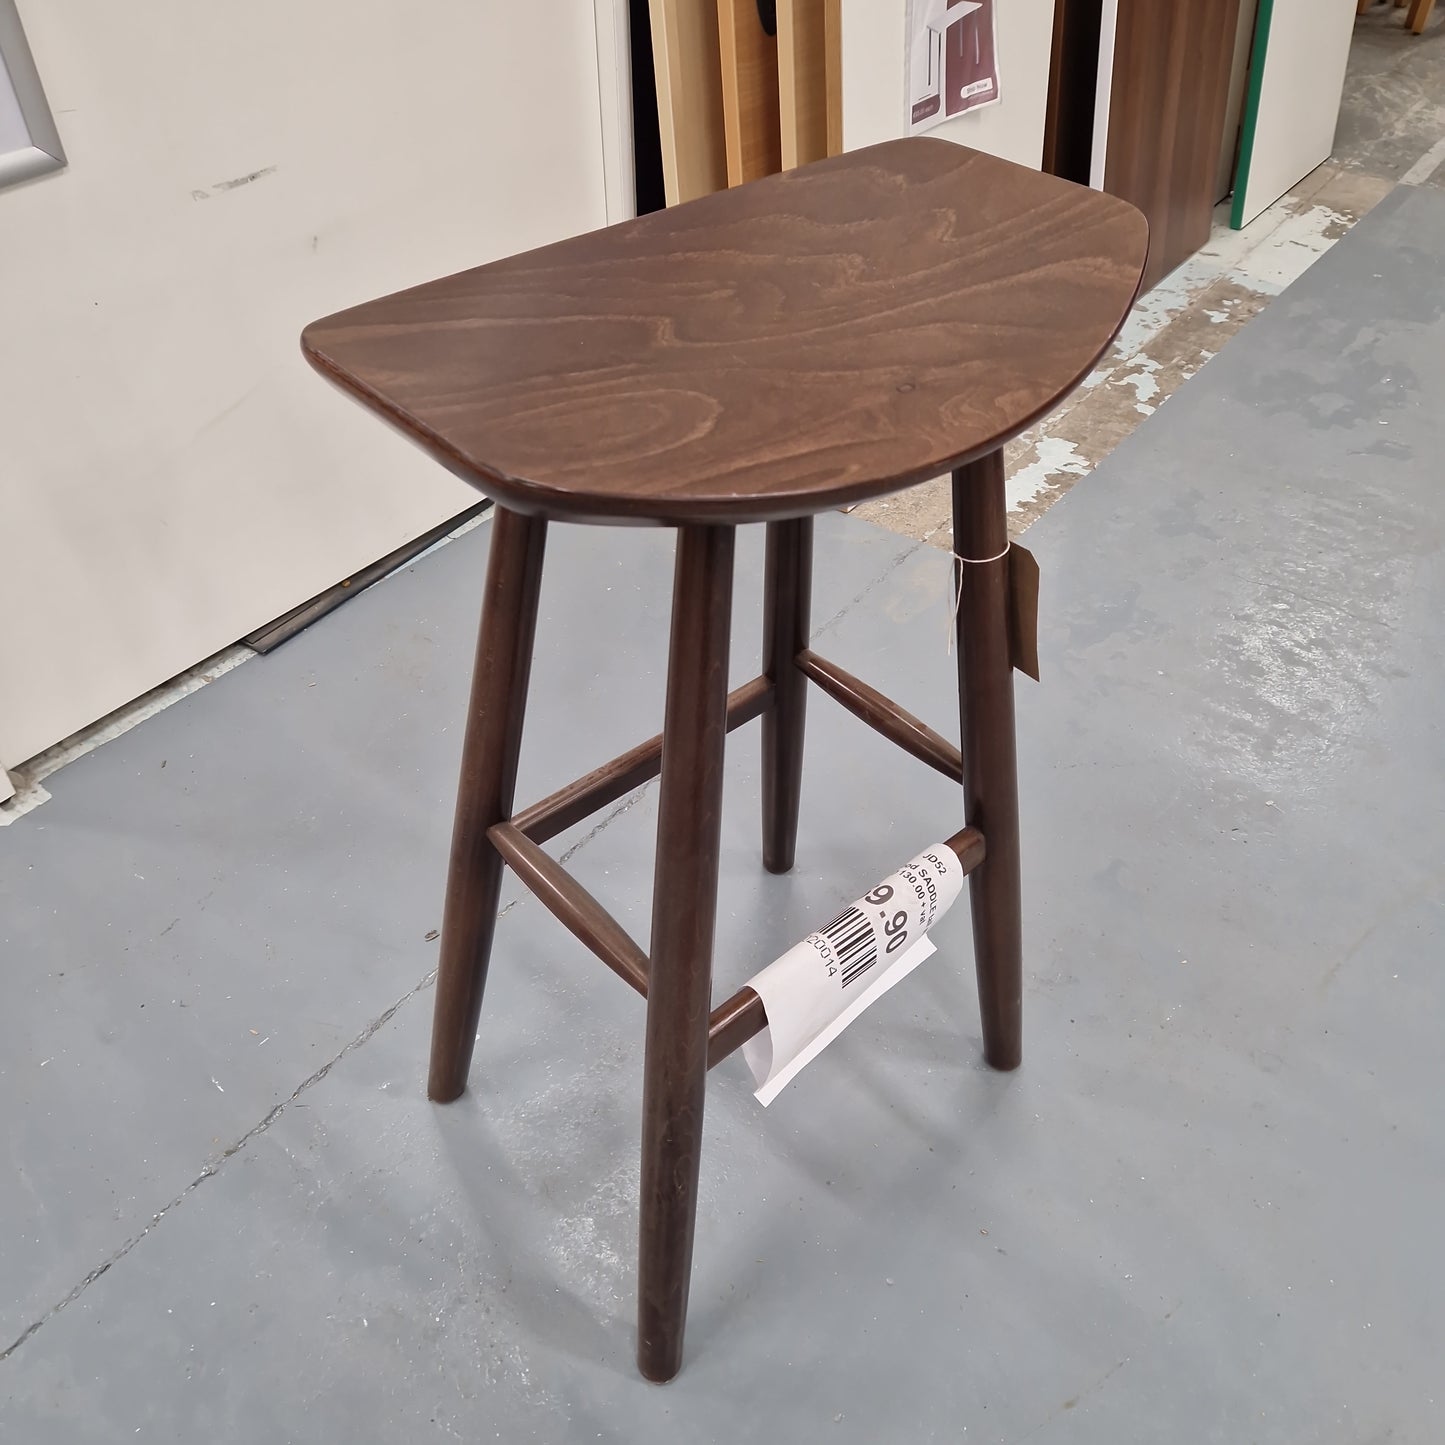 NEW Solid wood SADDLE tall stool
EURO 130.00 + vat